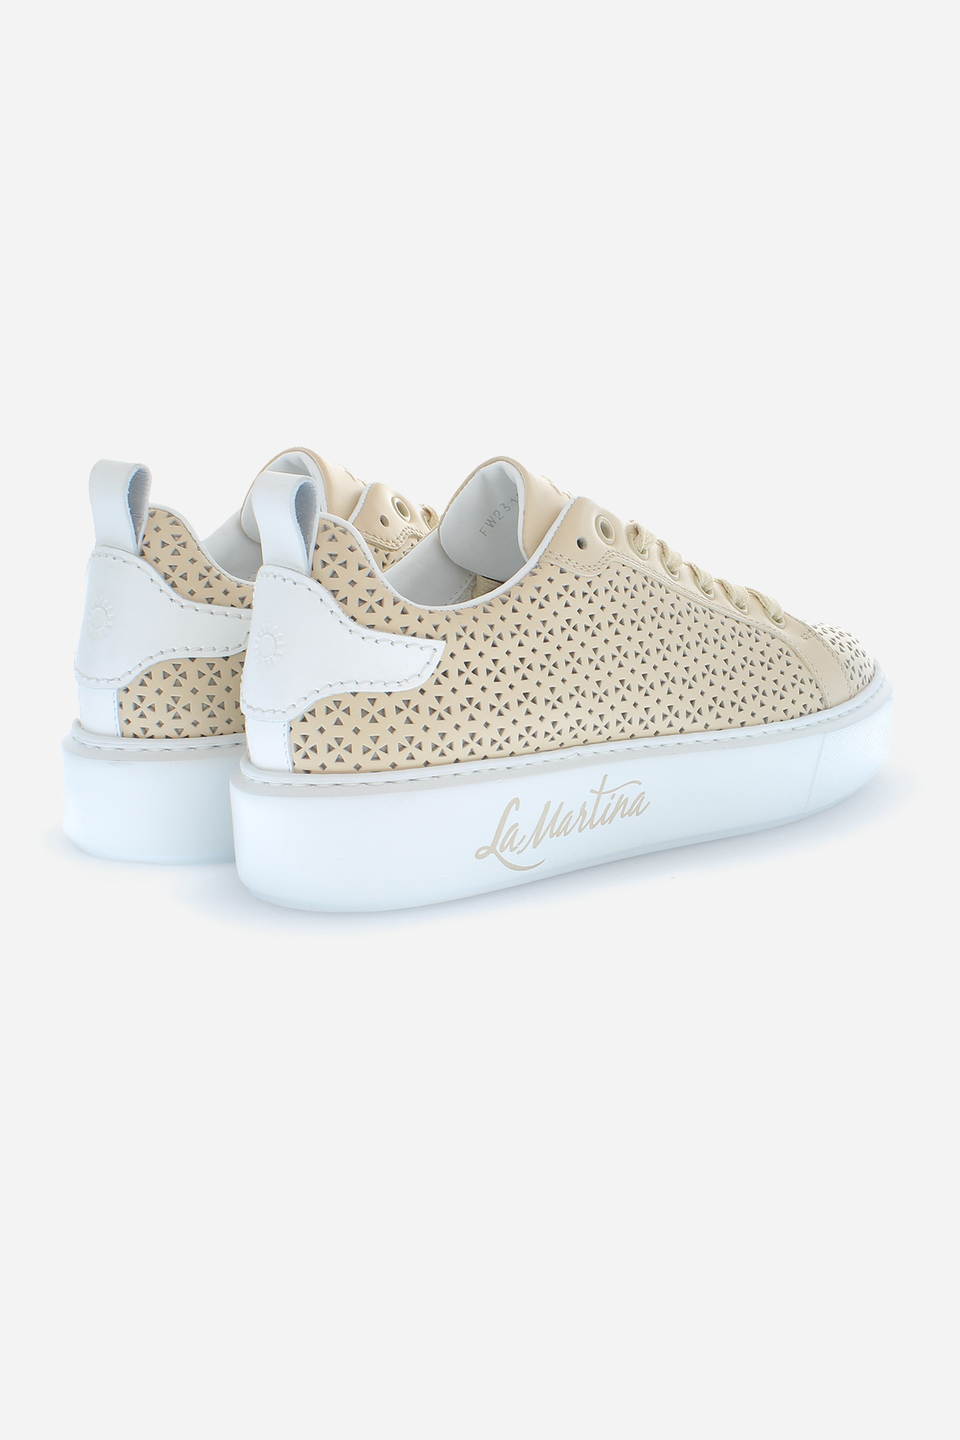 Sneaker in pelle | La Martina - Official Online Shop